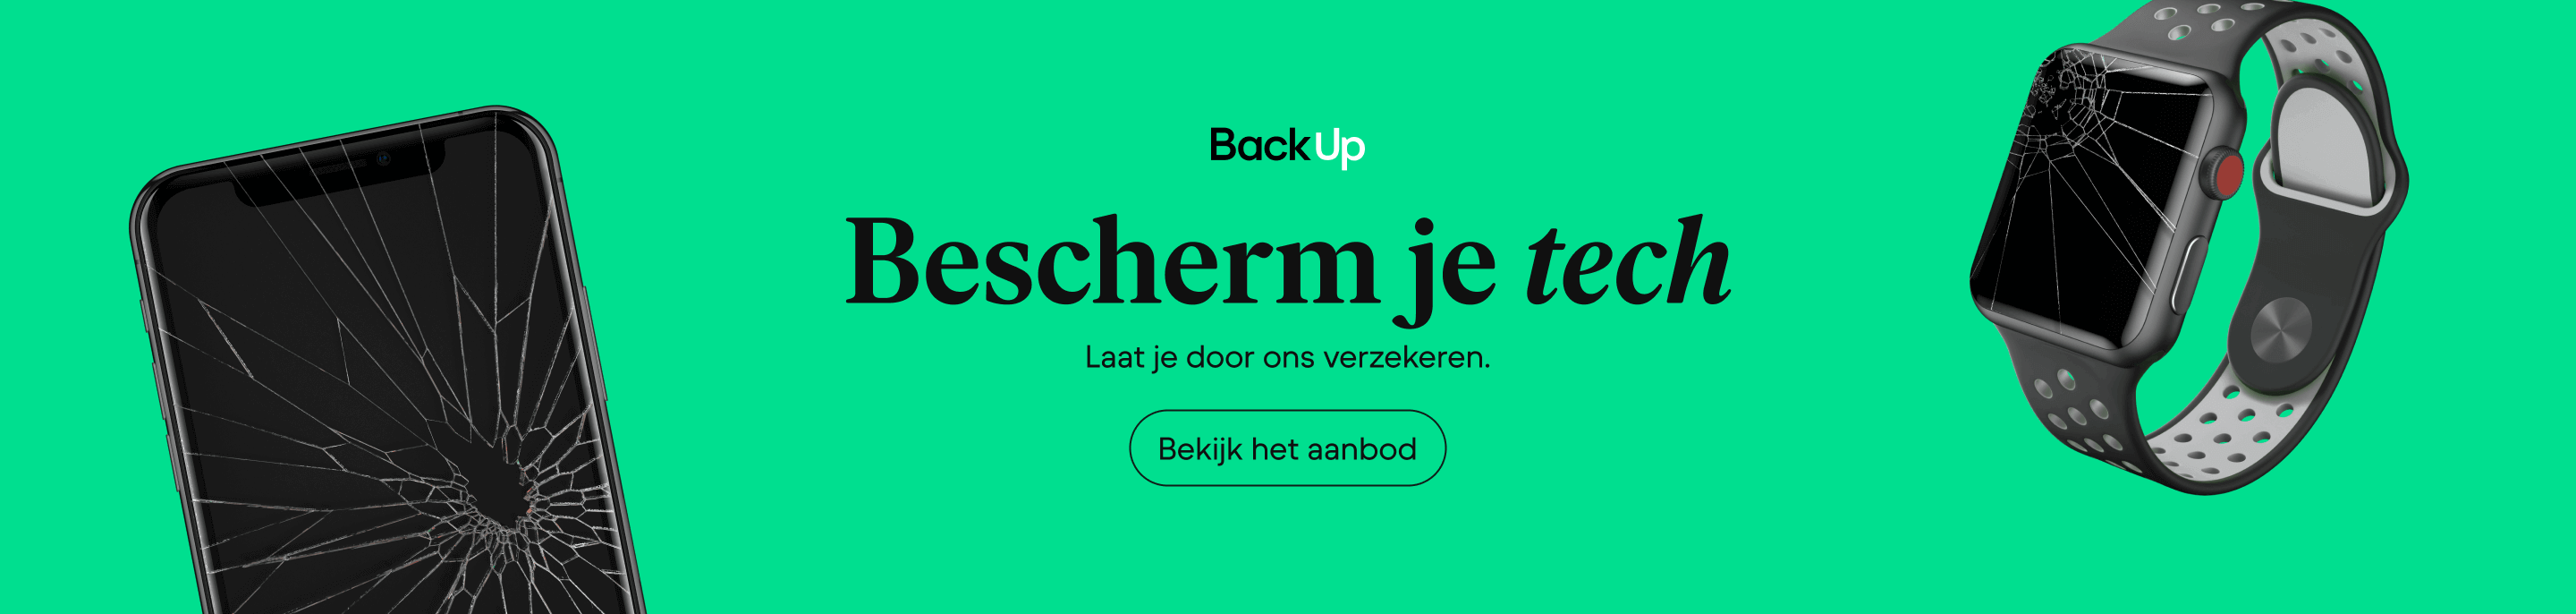 NL - BackUp